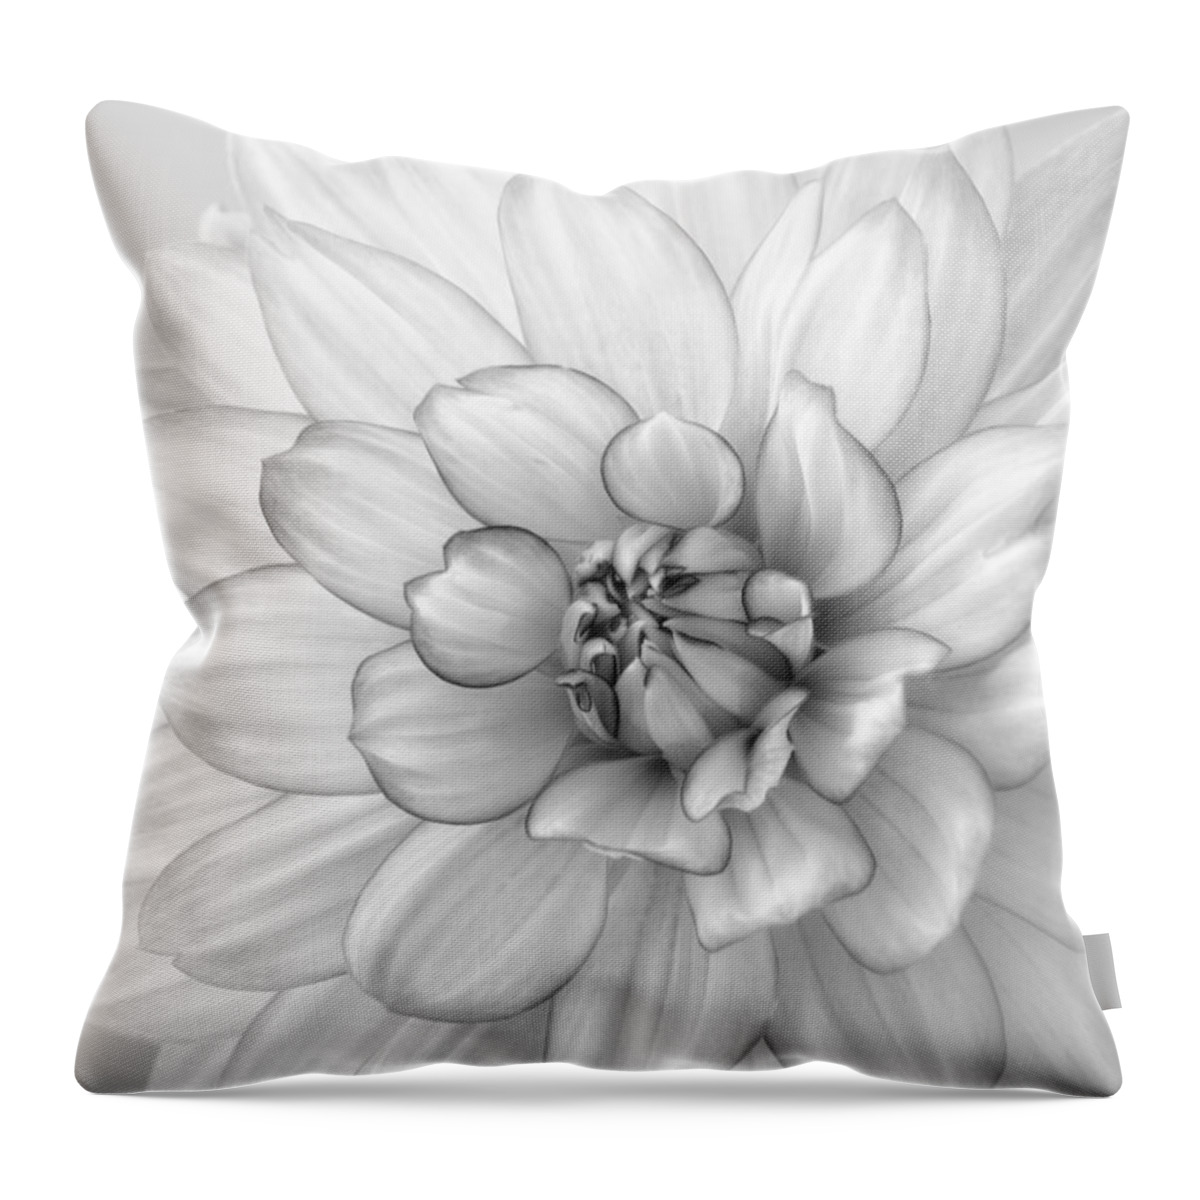 Dahlia Throw Pillow featuring the photograph Dahlia Flower Black and White by Kim Hojnacki